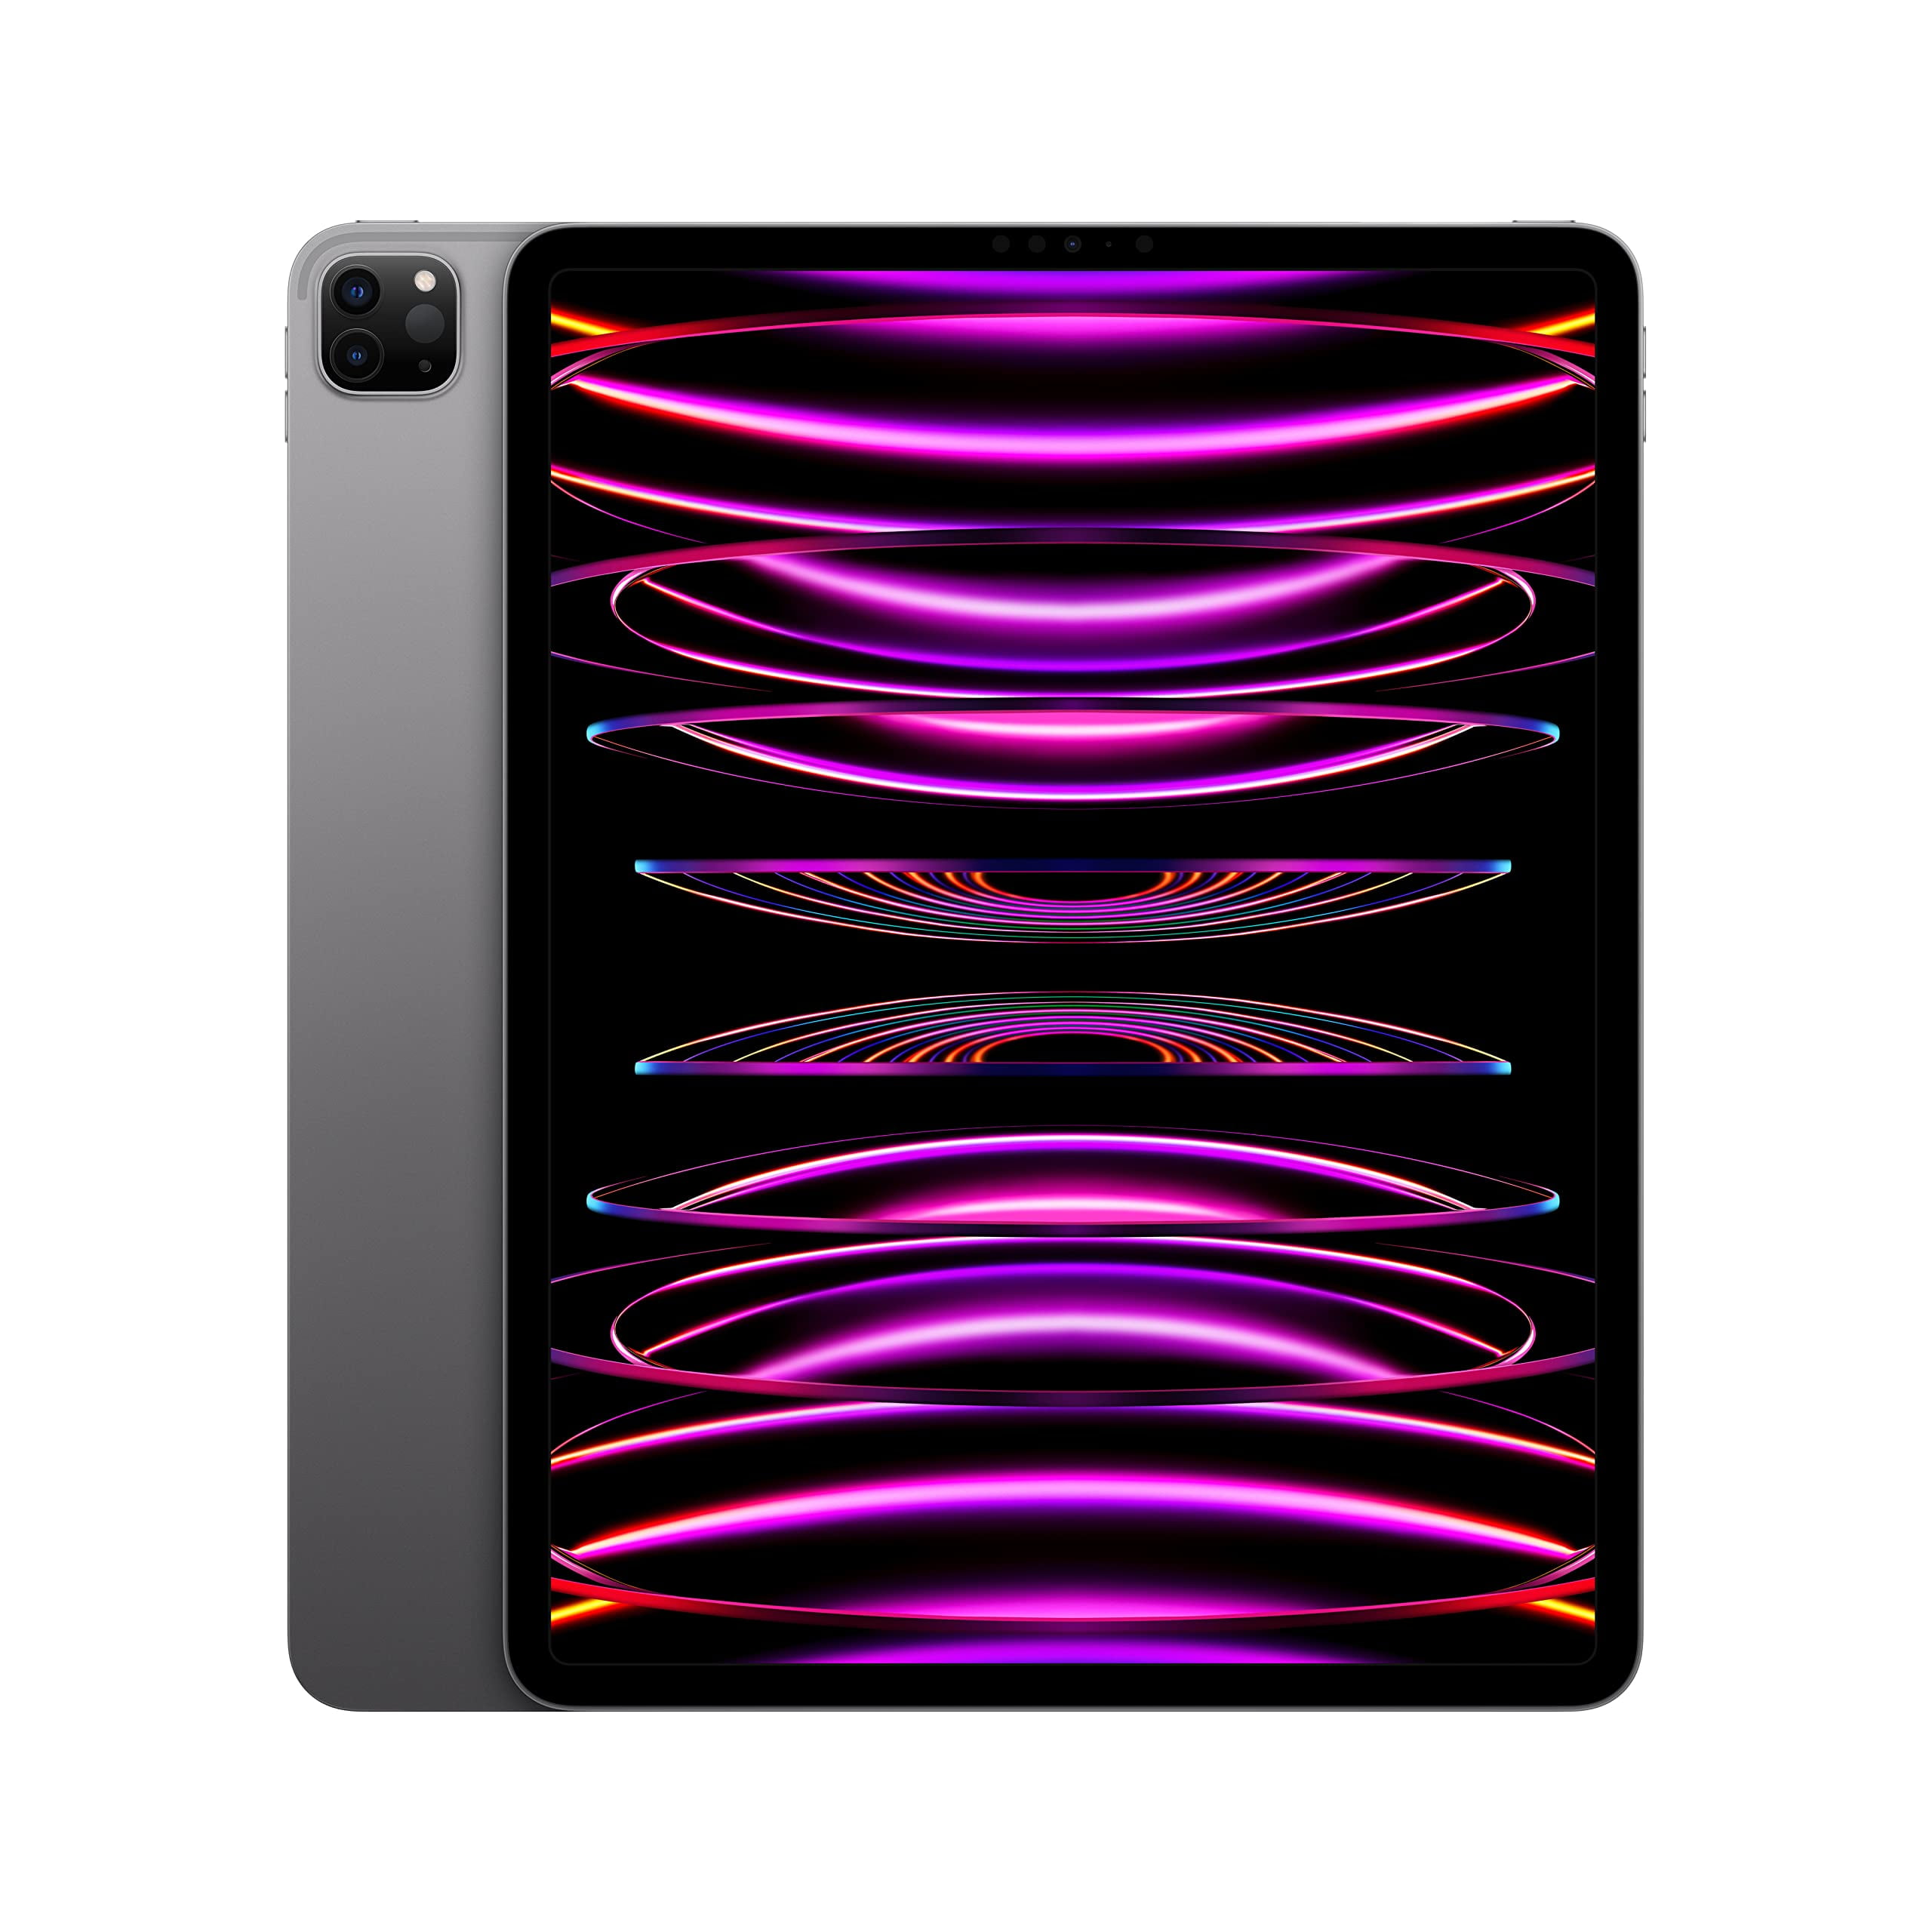 Apple 12.9-inch iPad Pro Wi-Fi 512GB - Silver - (6th Gen 